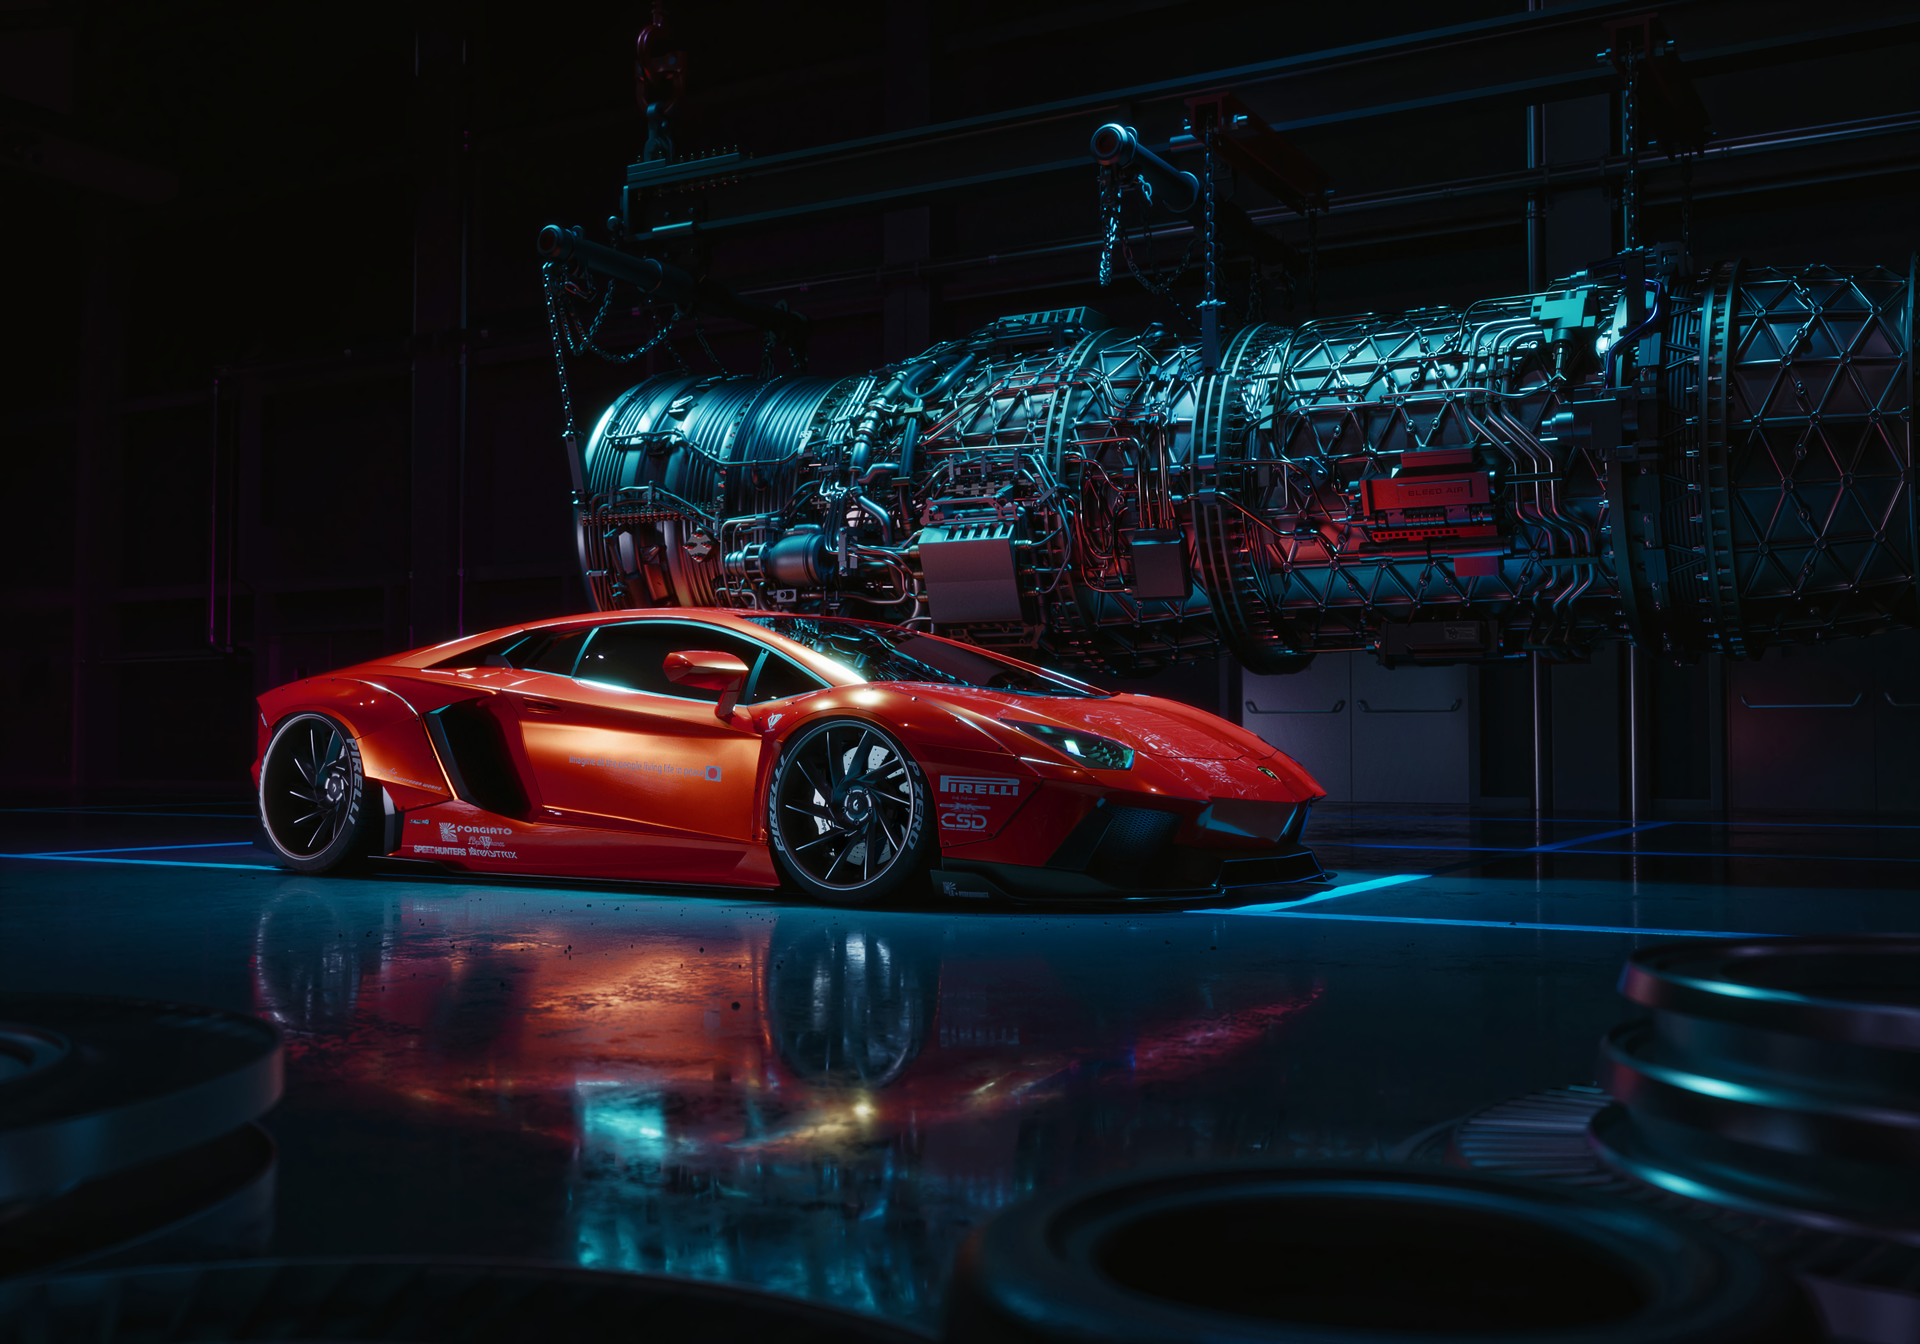 Car Super Car Italian Supercars Vehicle Lamborghini 3D Digital Art CGi Tires Jet Engine Red Cars Dar 1920x1344